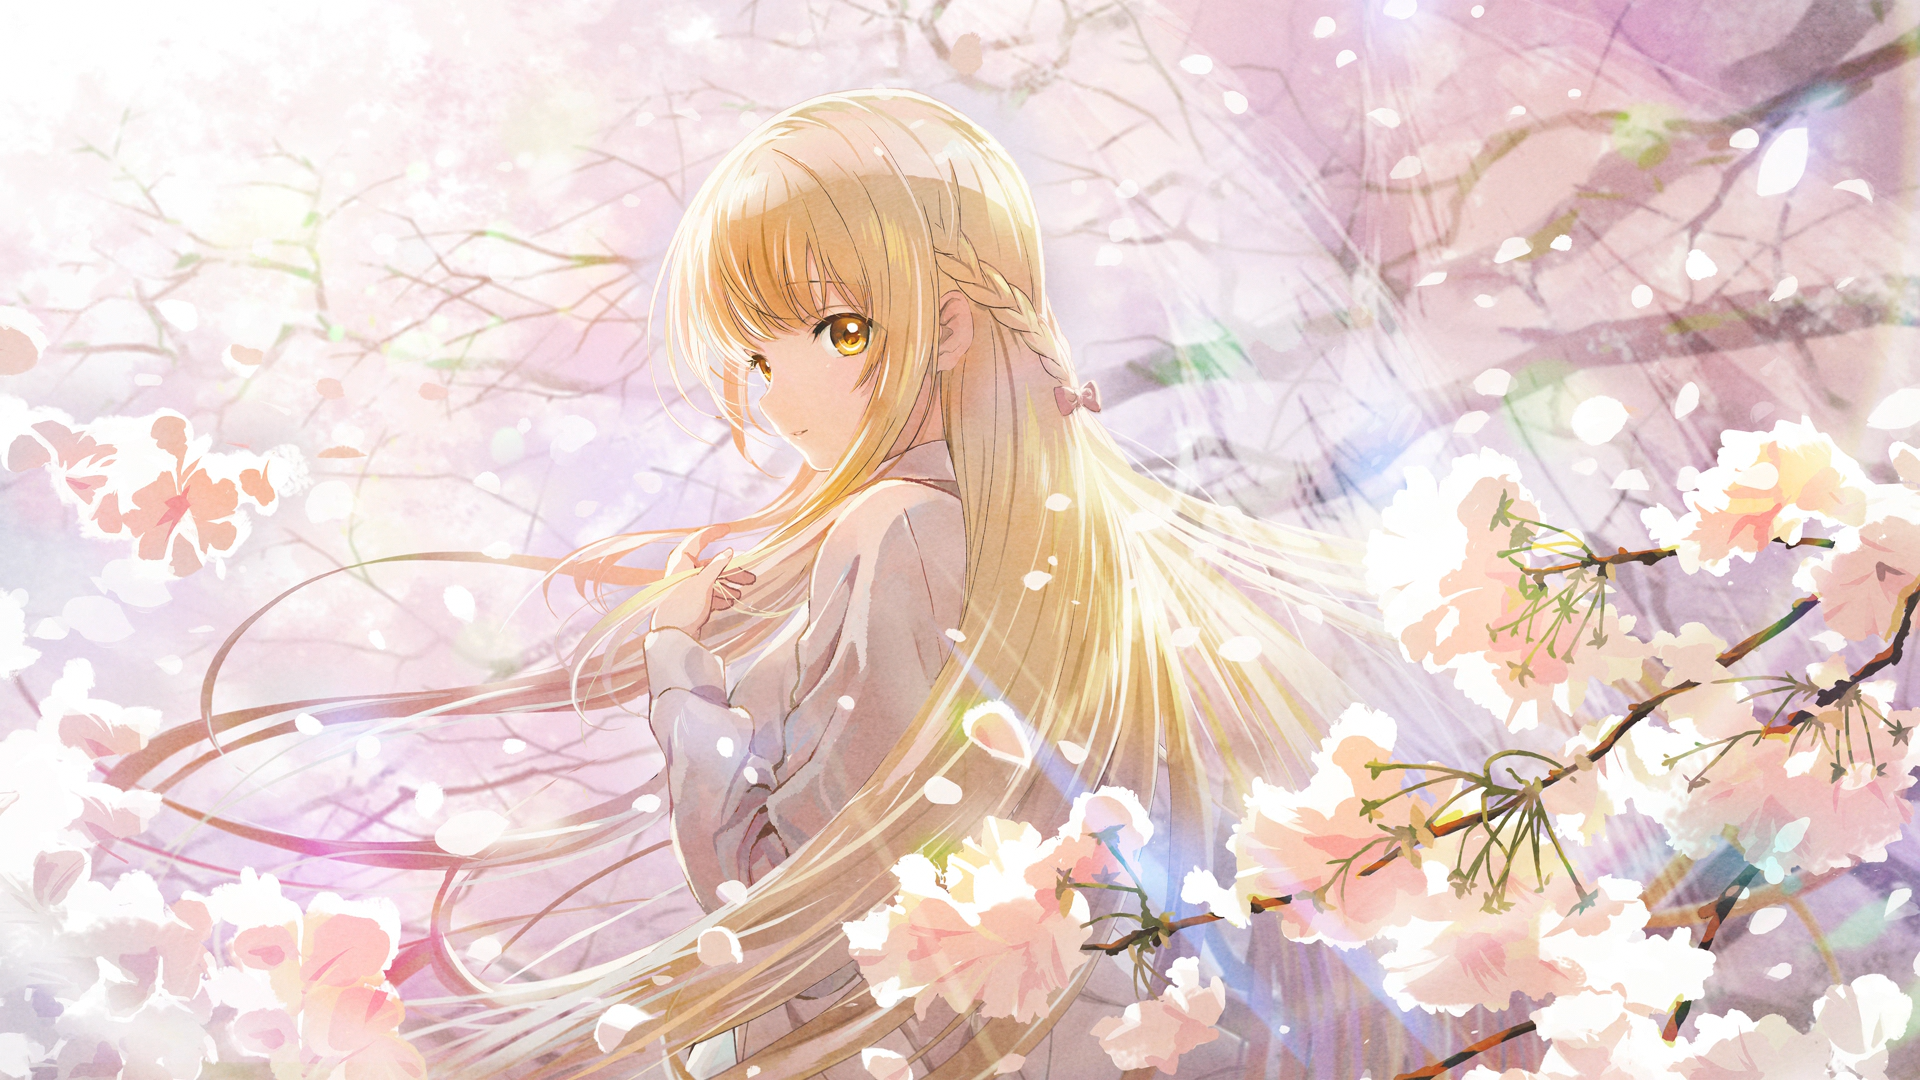 Anime Girls Mahiru Shiina Yellow Eyes Blonde Nature Flowers Petals Braided Hair Long Hair Looking At 1920x1080